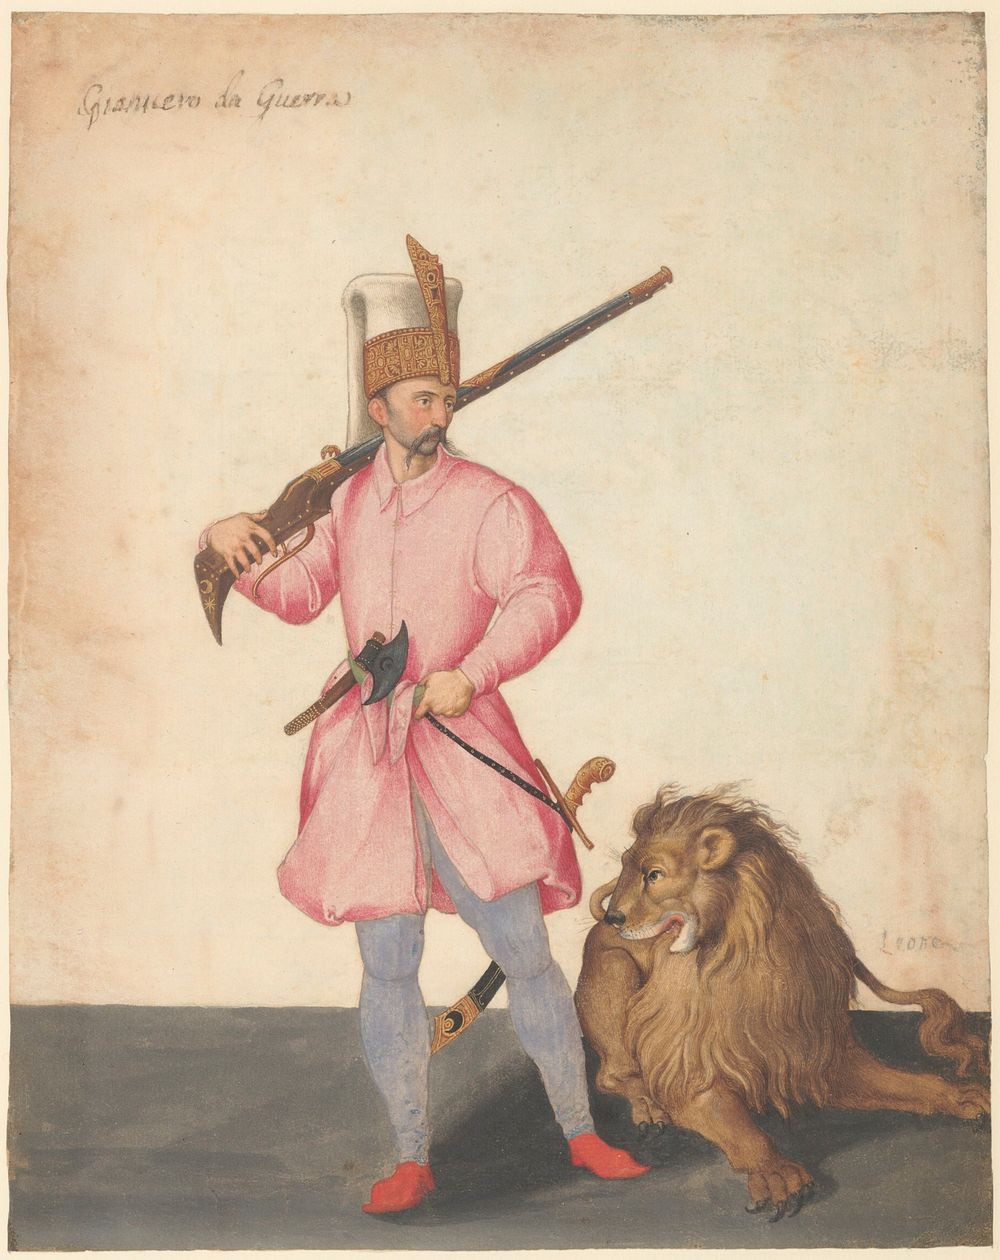 A Janissary "of War" with a Lion by Jacopo Ligozzi